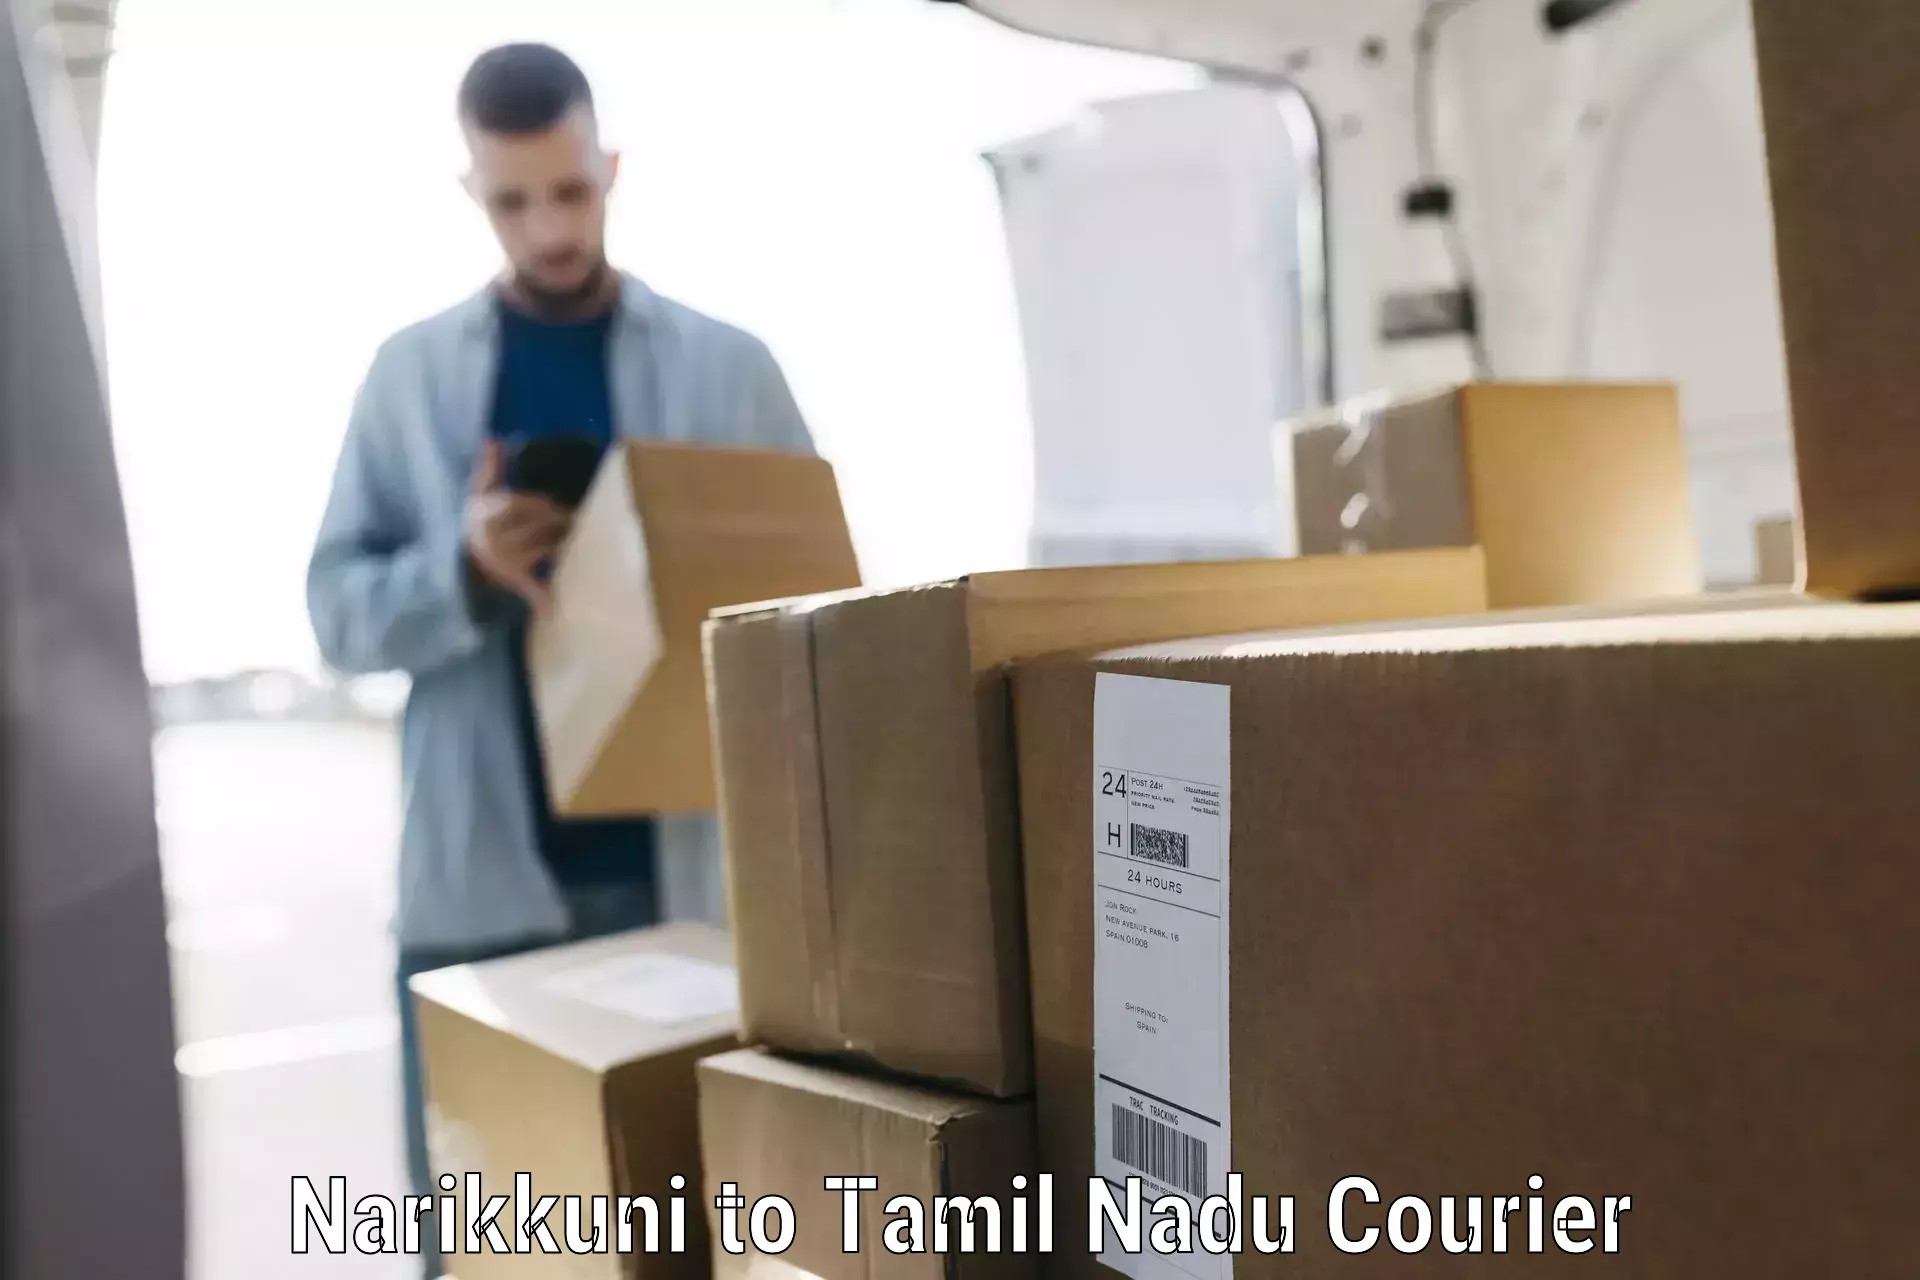 Luggage shipment processing Narikkuni to Mayiladuthurai